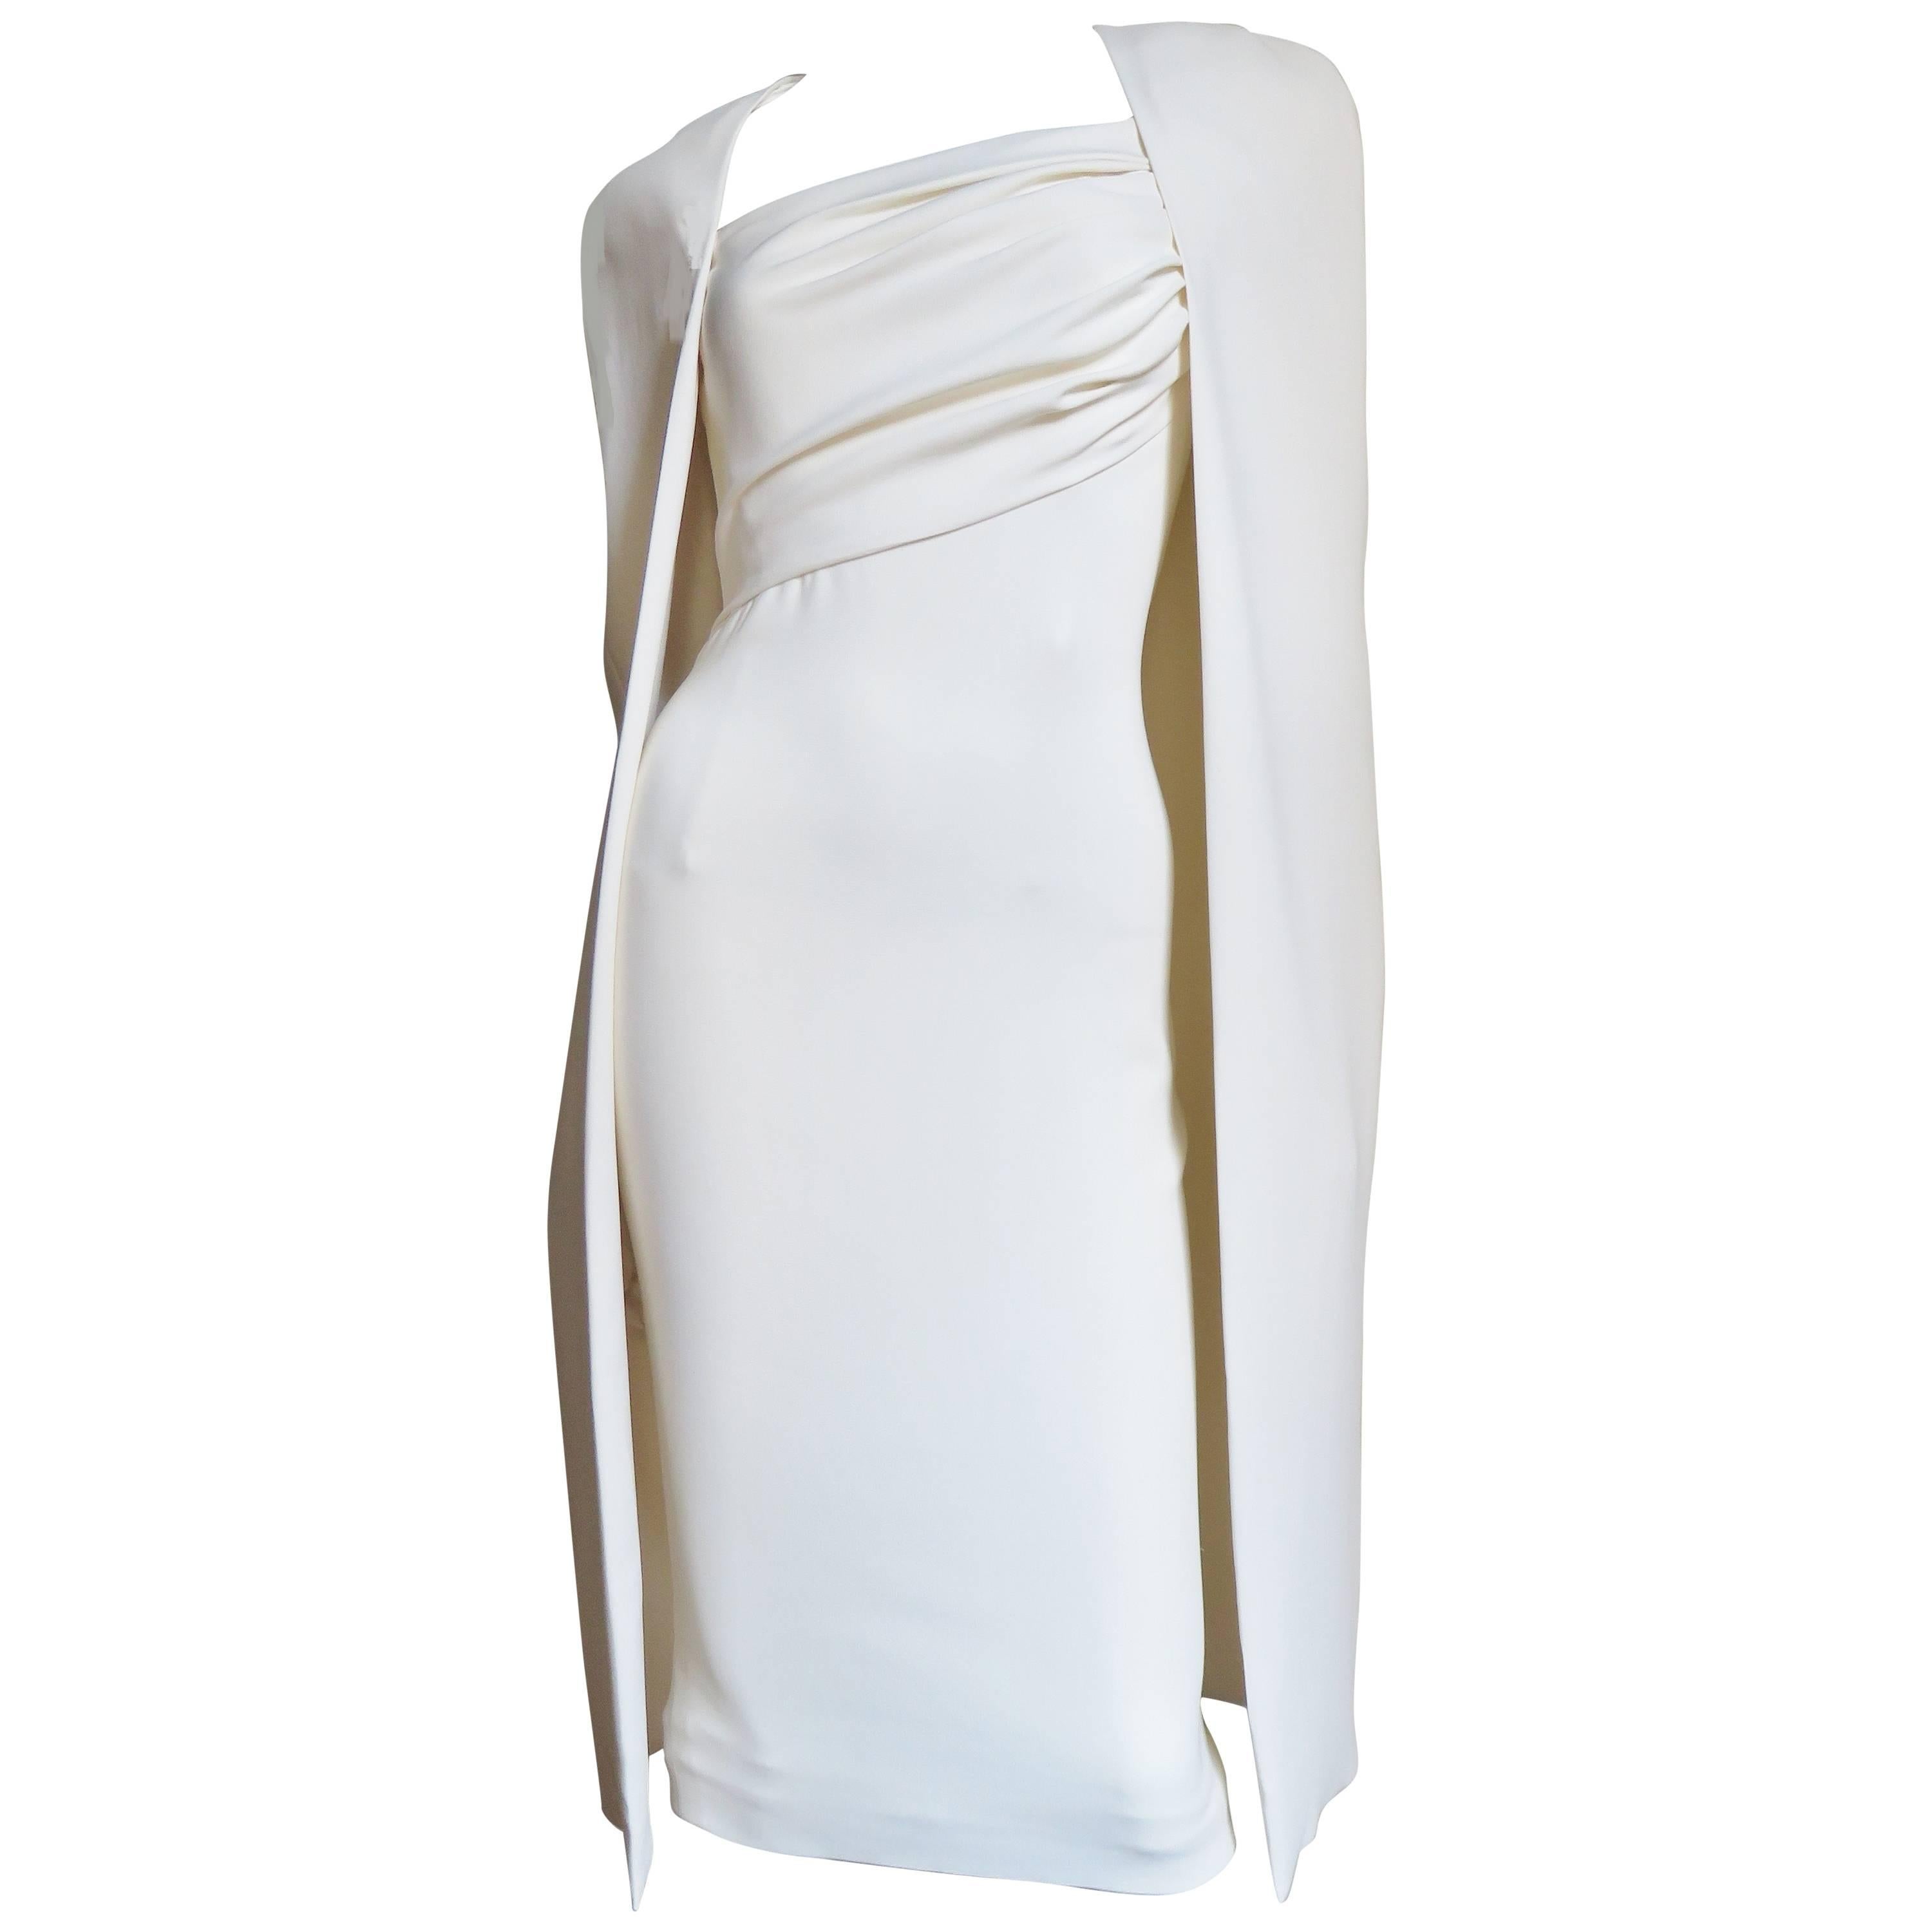 Iconic Tom Ford Academy Award Gwyneth Paltrow New Dress & Cape 